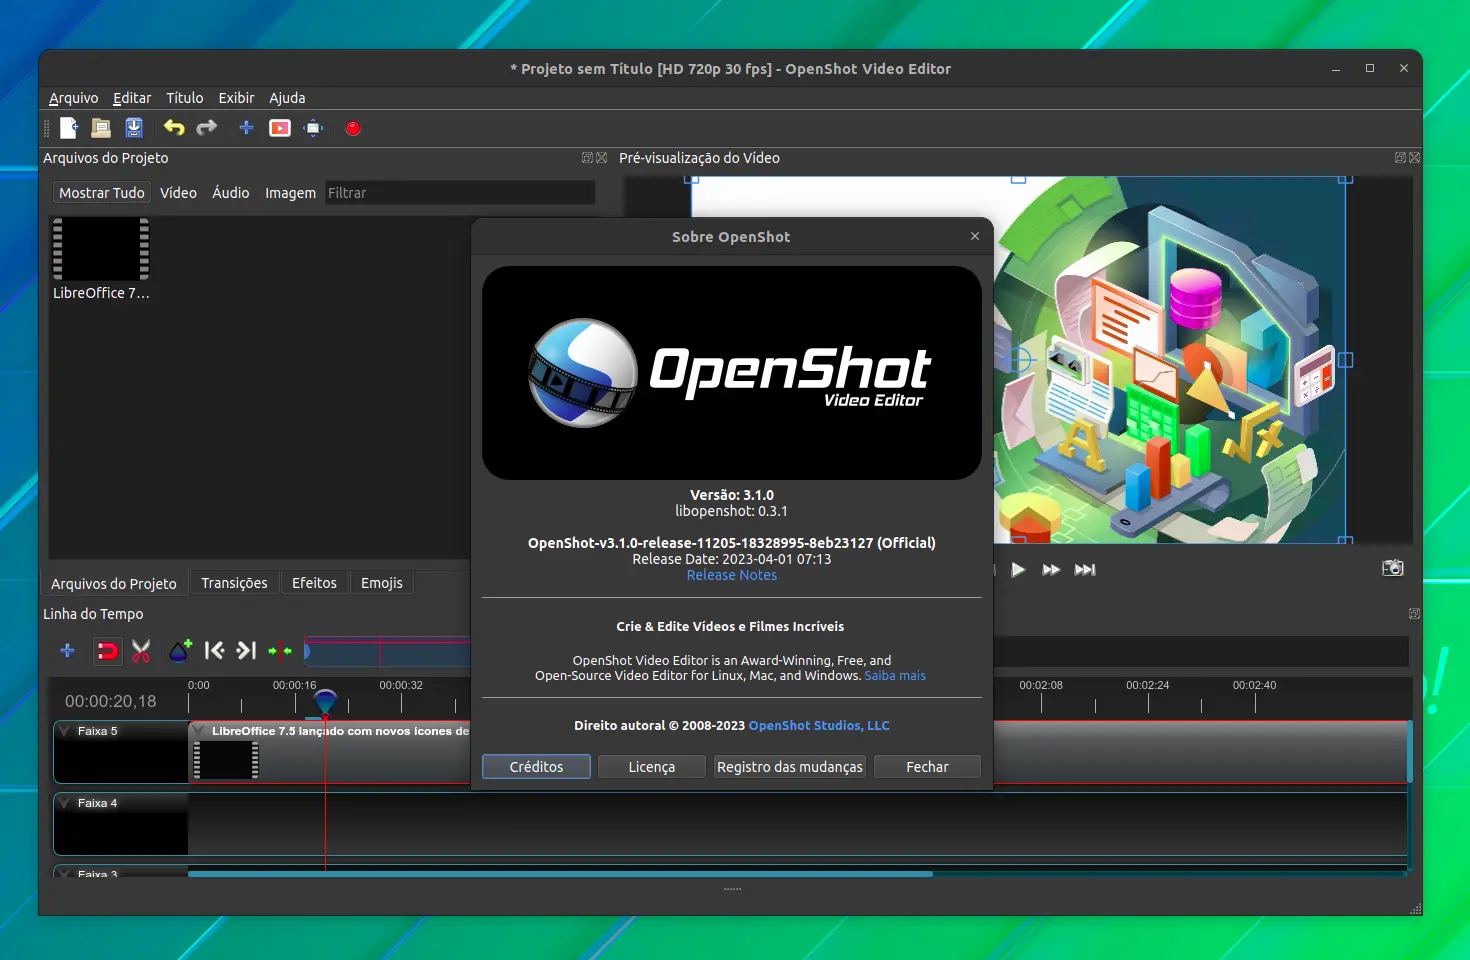 Rilasciato OpenShot 3.1